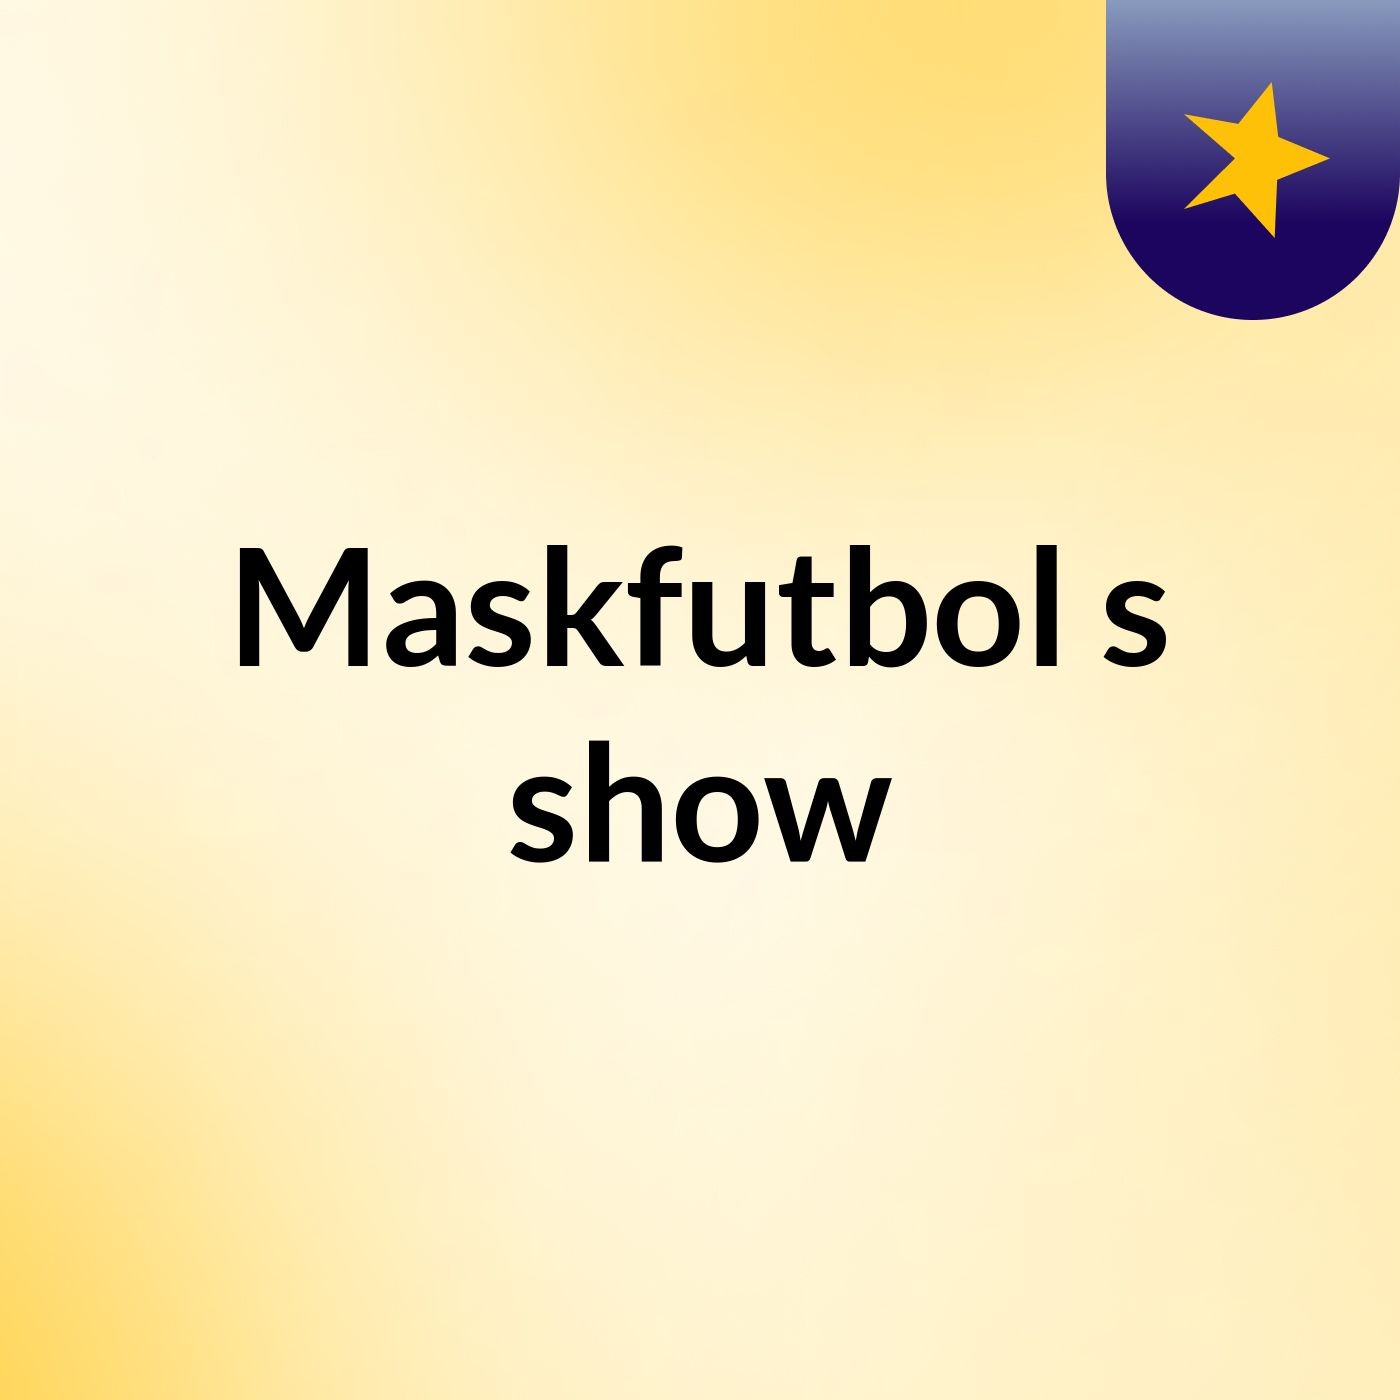 Maskfutbol's show